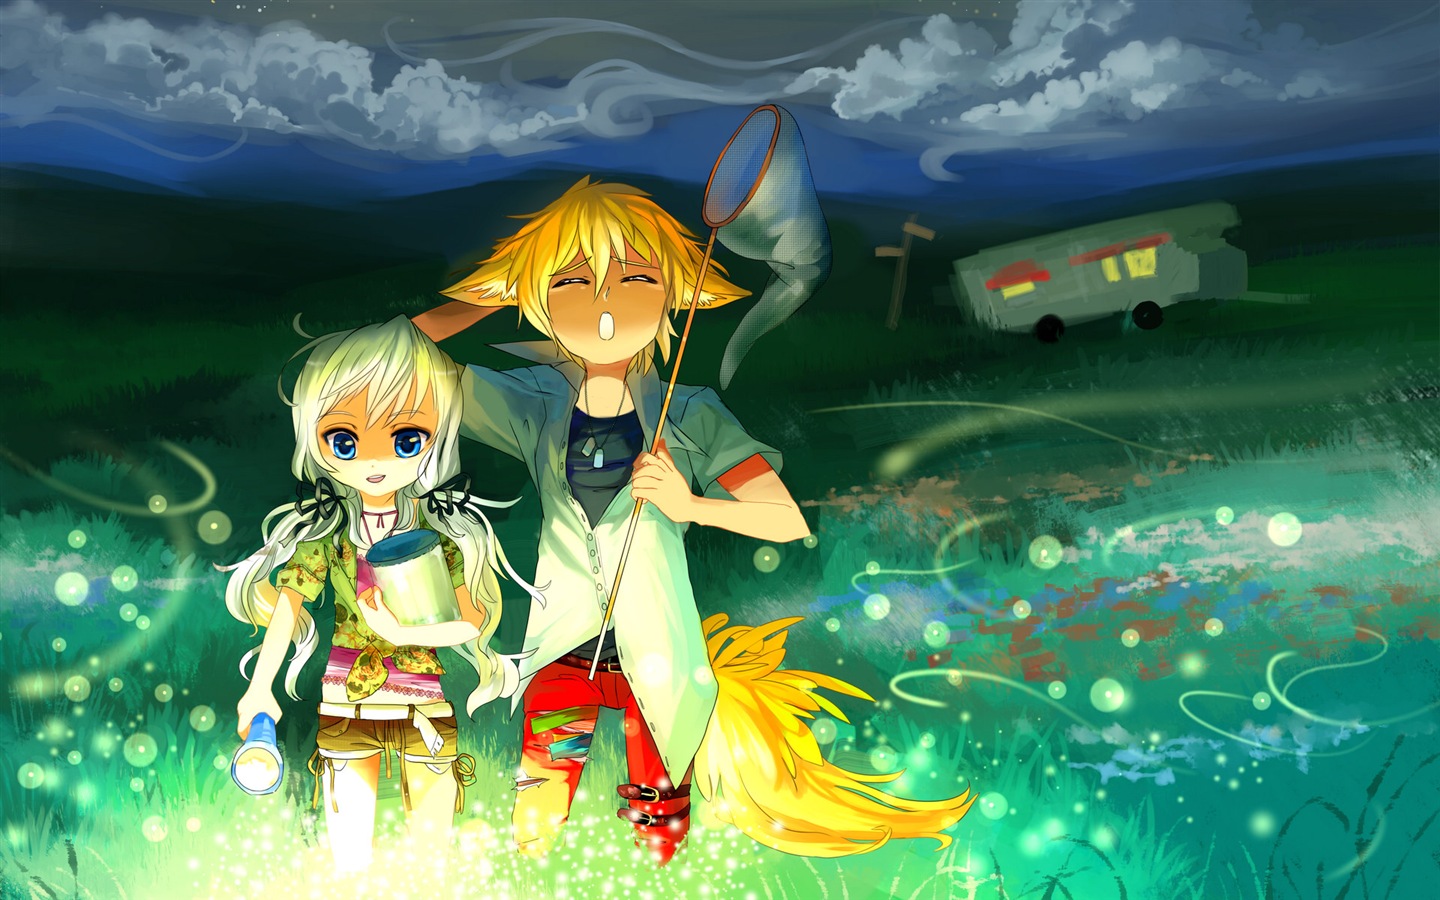 Firefly Summer beautiful anime wallpaper #15 - 1440x900